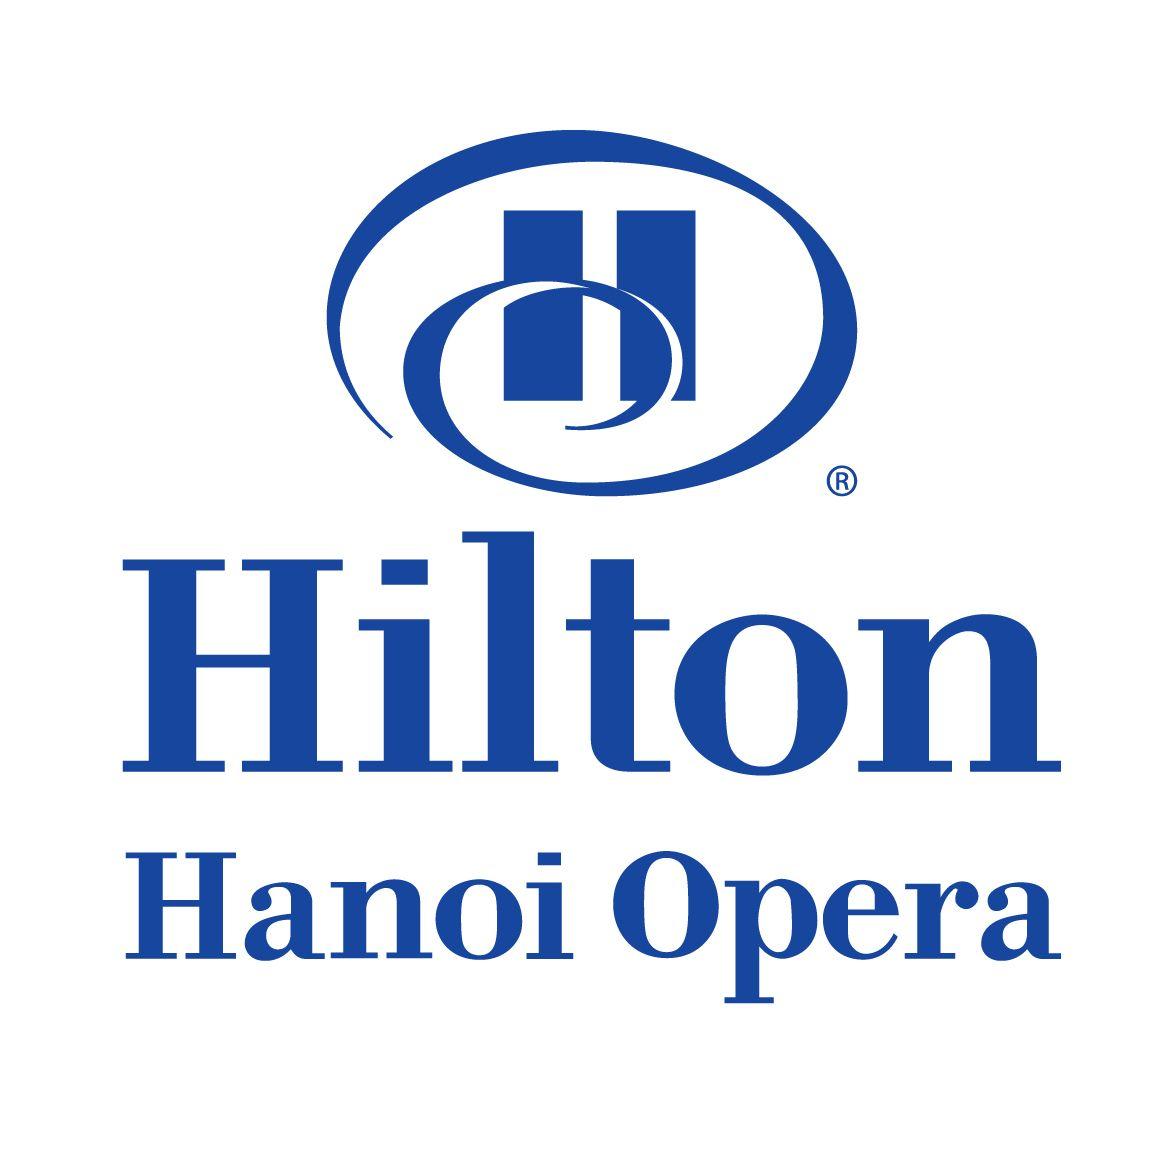 Opera Hotel Logo - Logo / Flo. Hotel logo, Logos, Hilton hotels